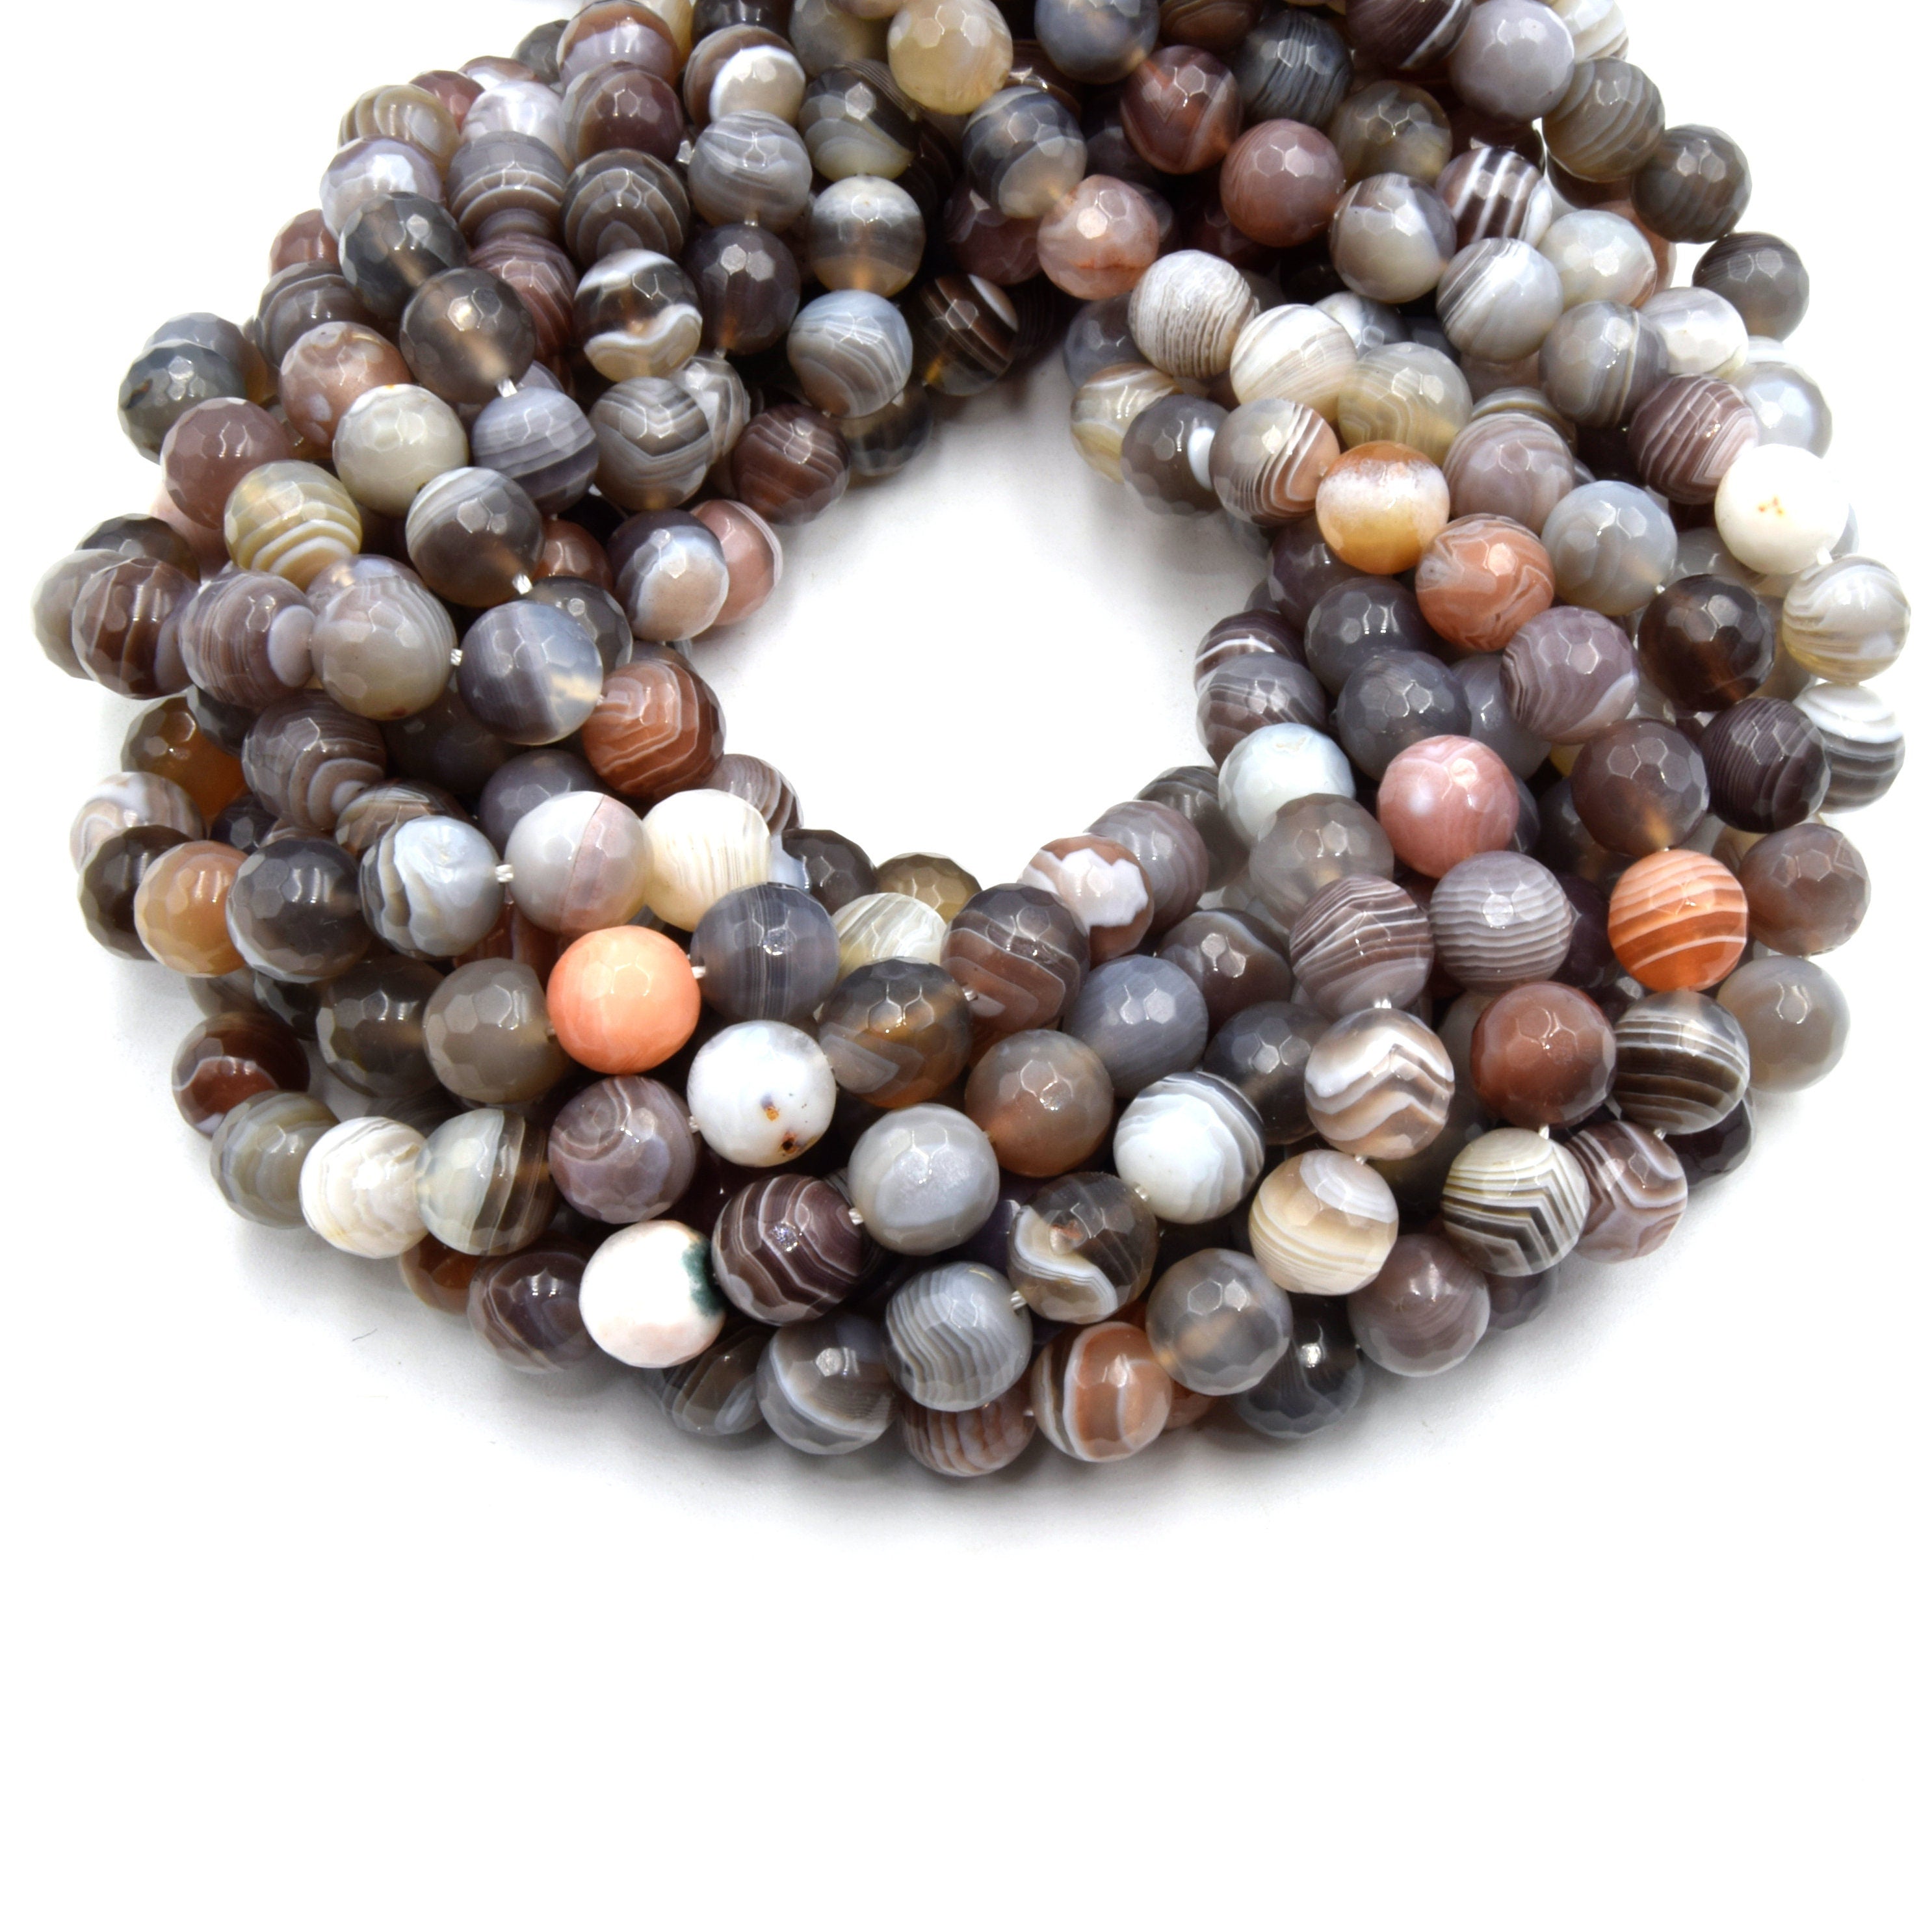 Botswana Agate Beads, Faceted Round Loose Gemstone Beads